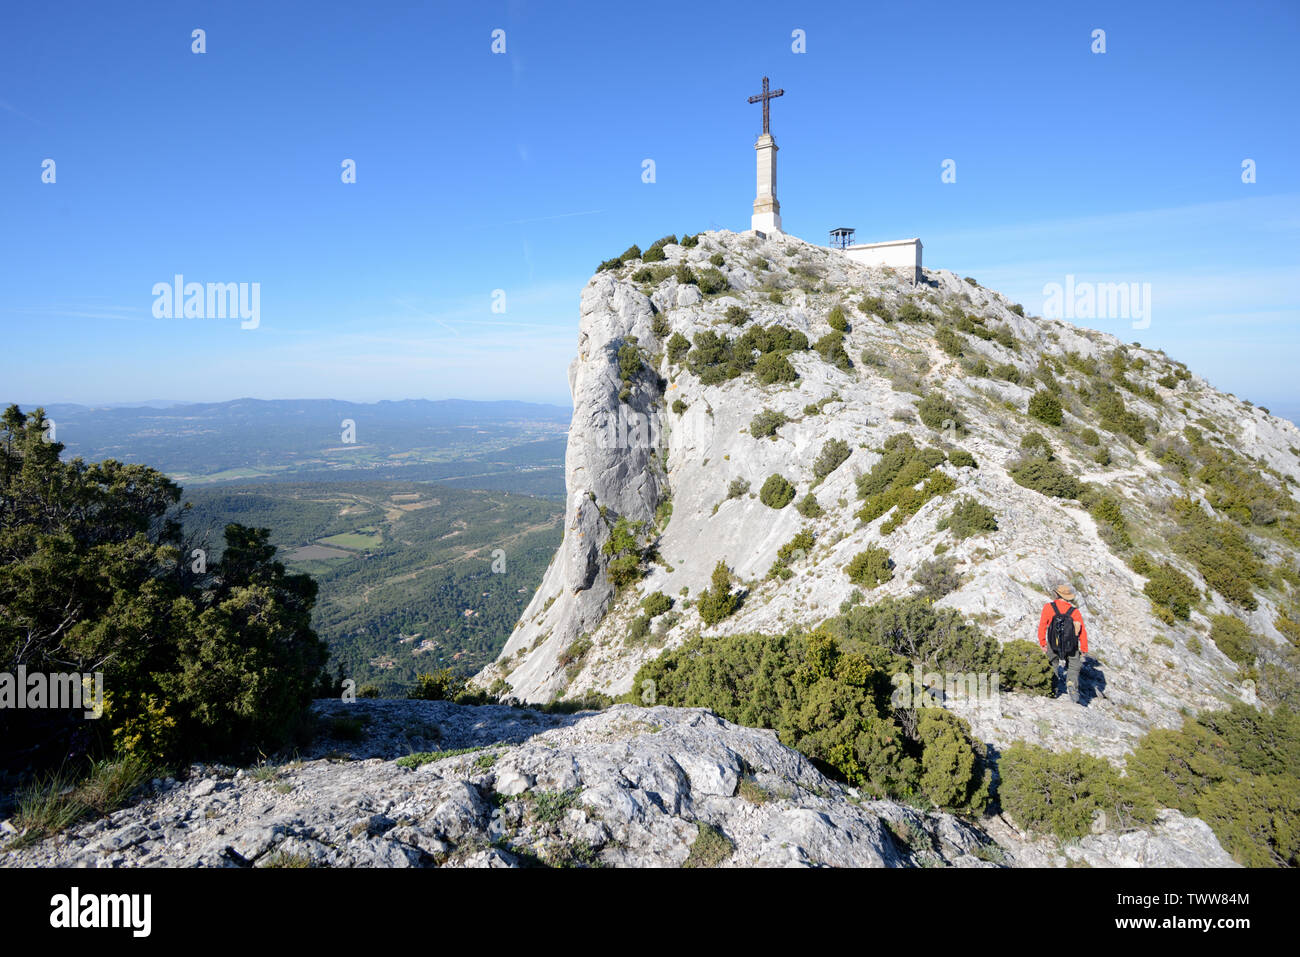 Walker in der Nähe der Gipfel des Mont oder Montagne Sainte-Victoire Aix-en-Provence Provence Frankreich Stockfoto